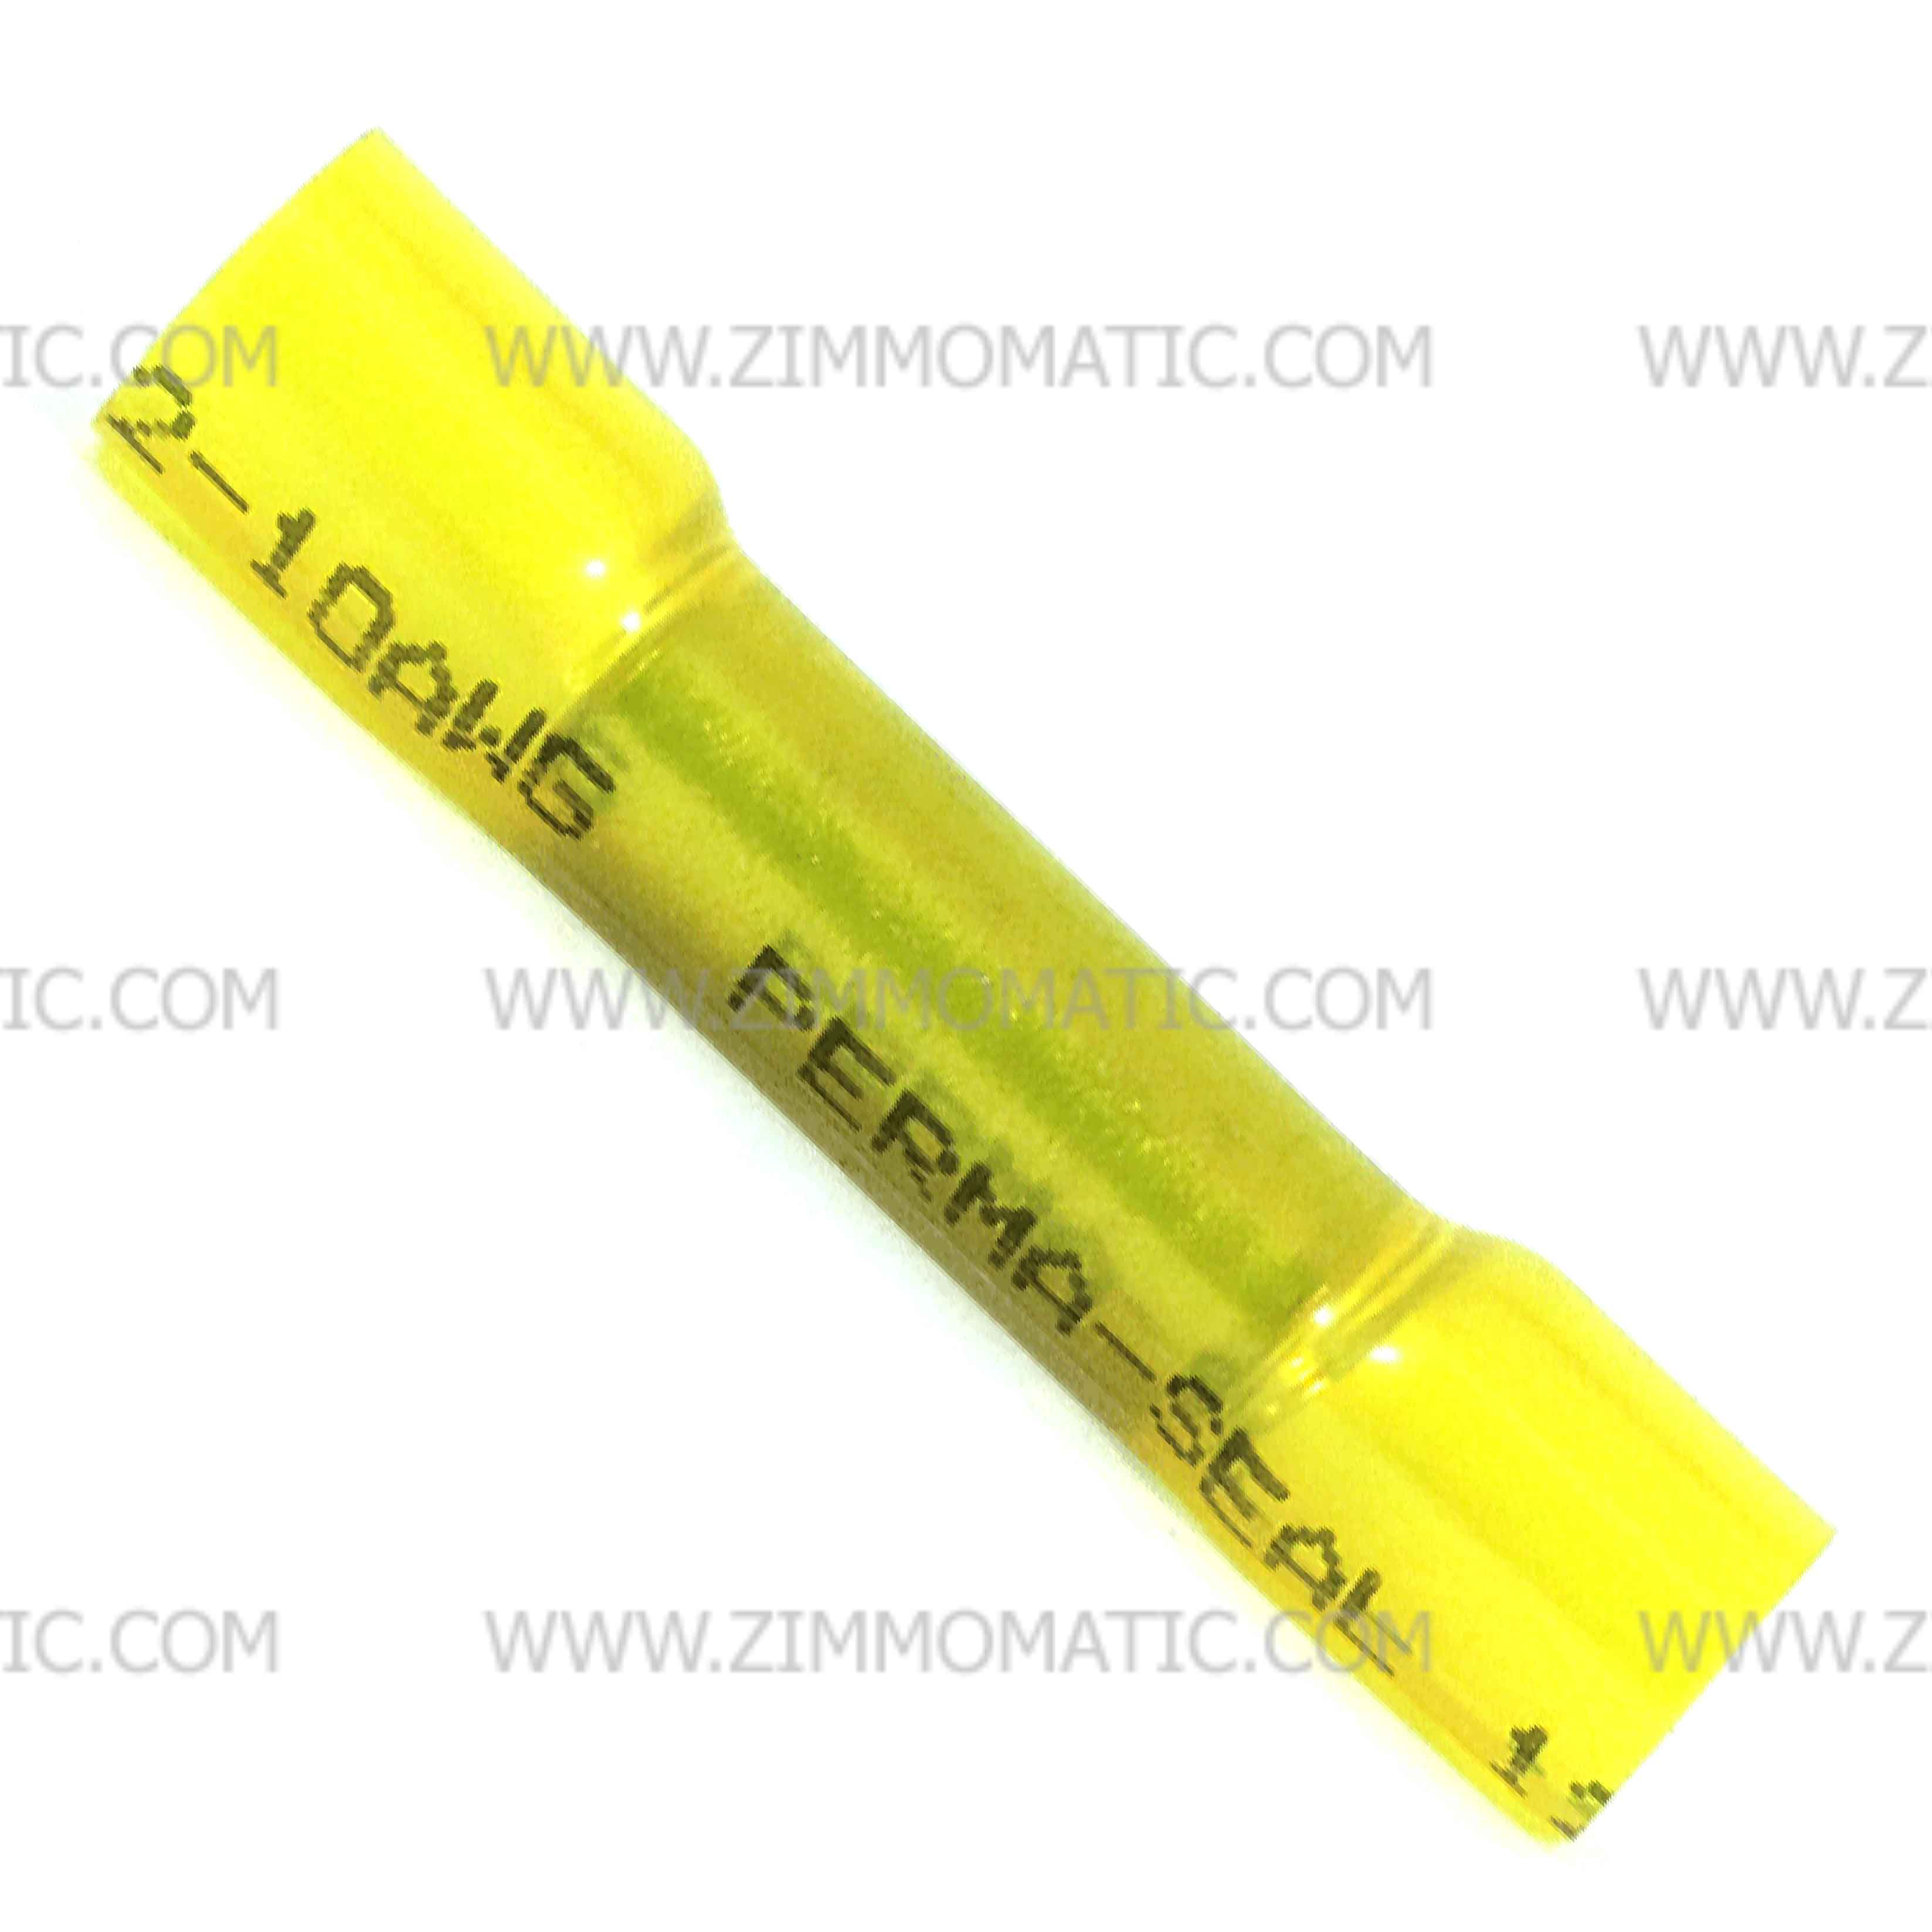 12-10 gauge yellow heat shrink/crimp butt connector